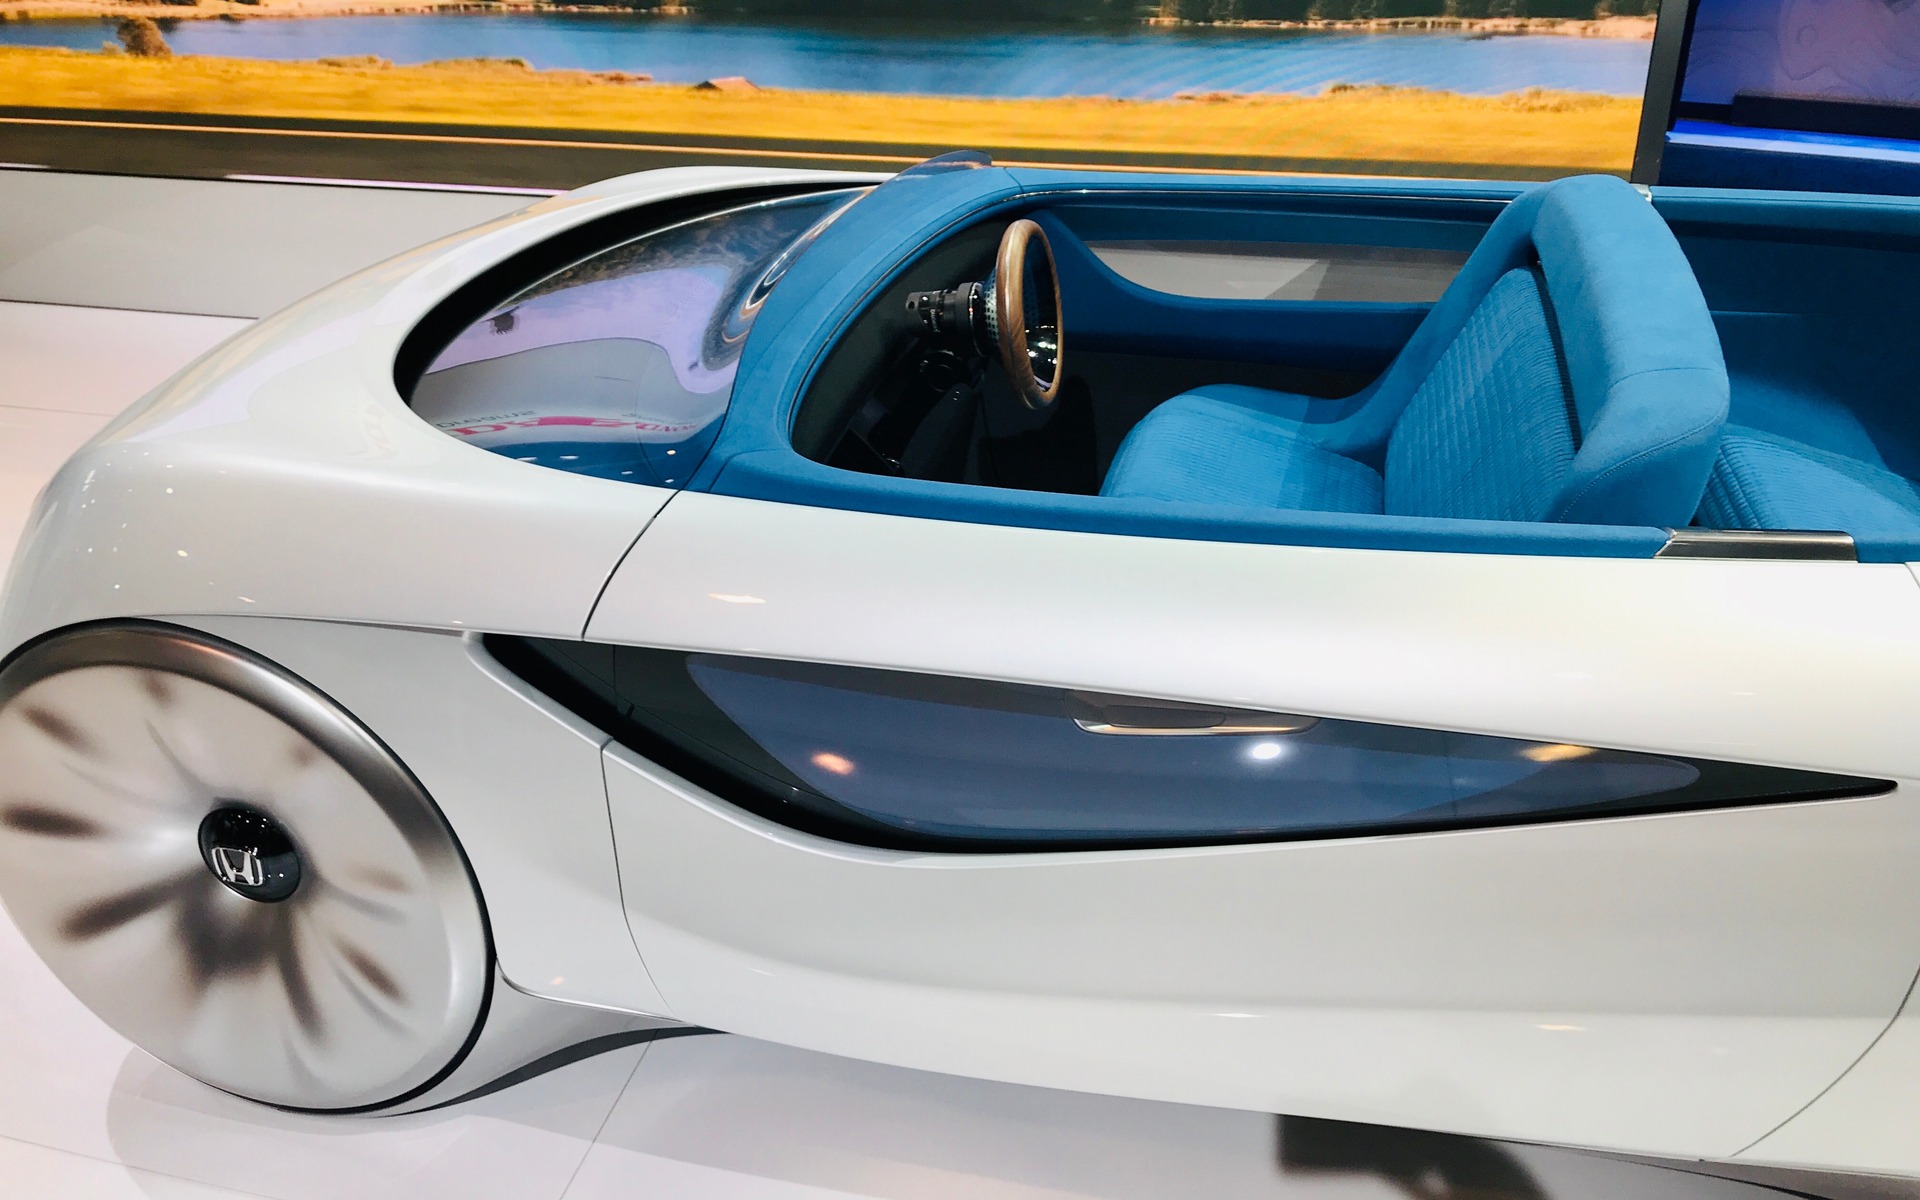 <p>Honda Augmented Driving Concept</p>